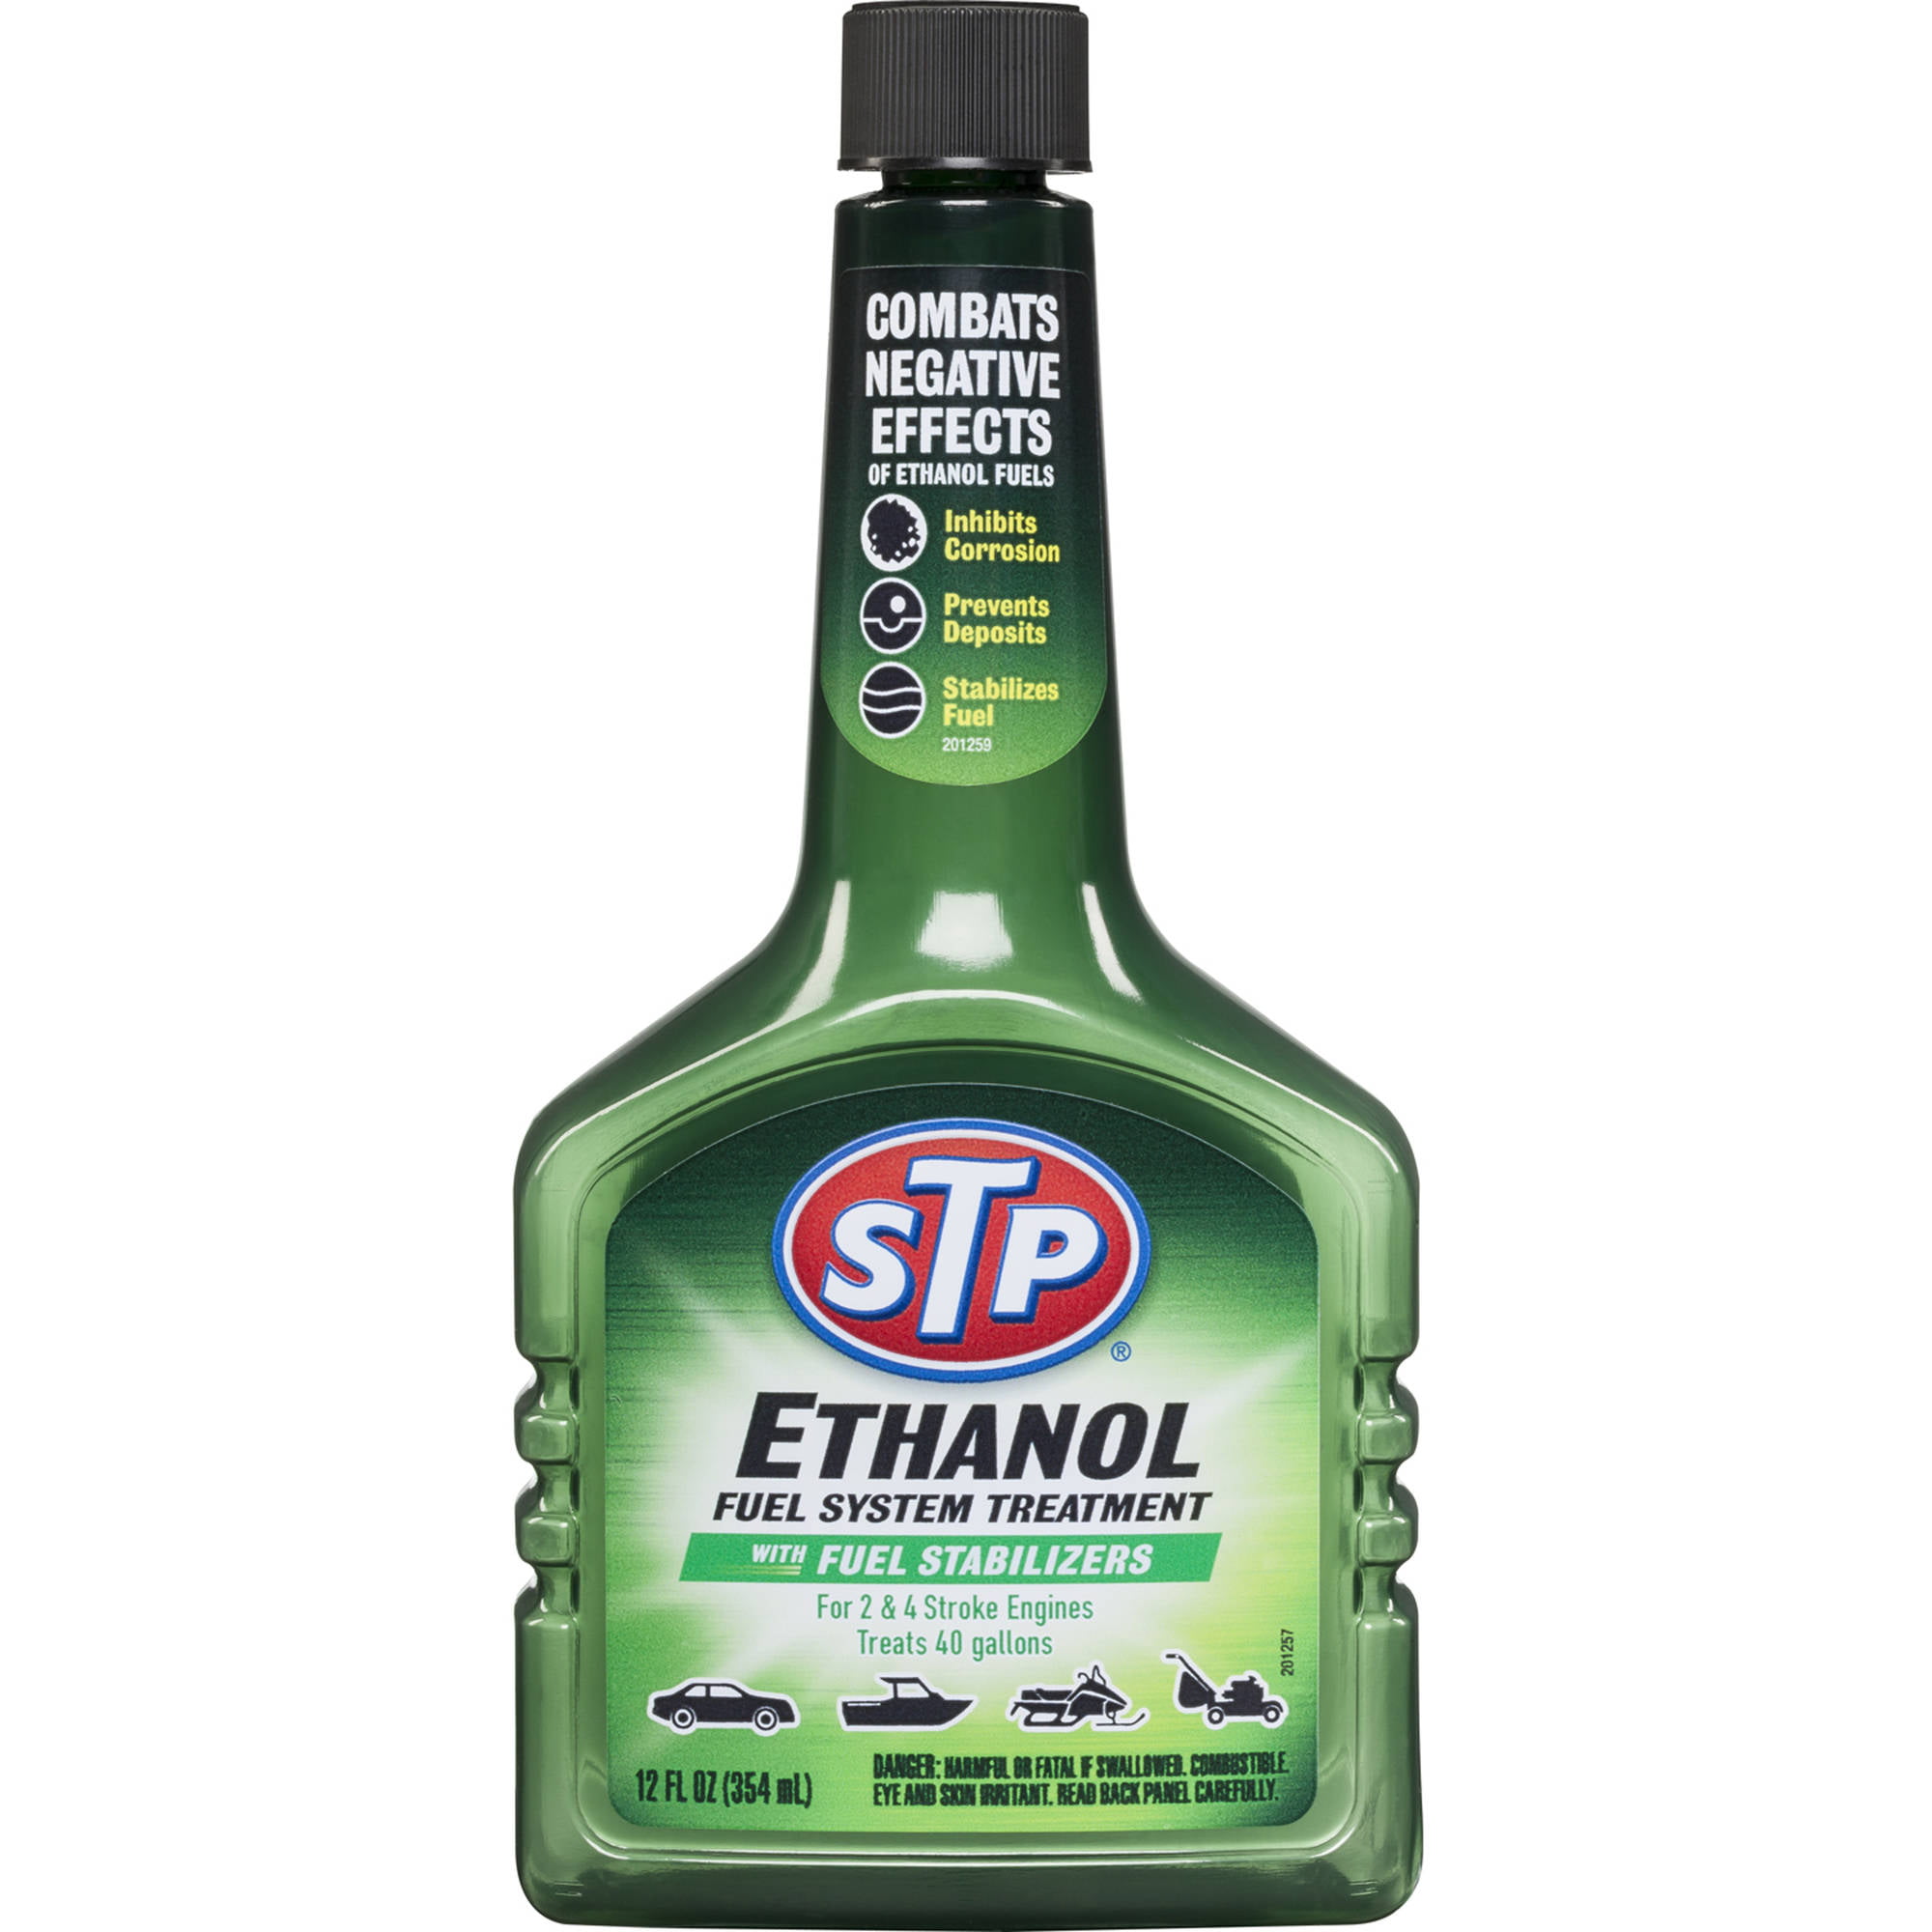 Stp Ethanol Fuel System Treatment Fuel Stabilizers 12 Fl Oz